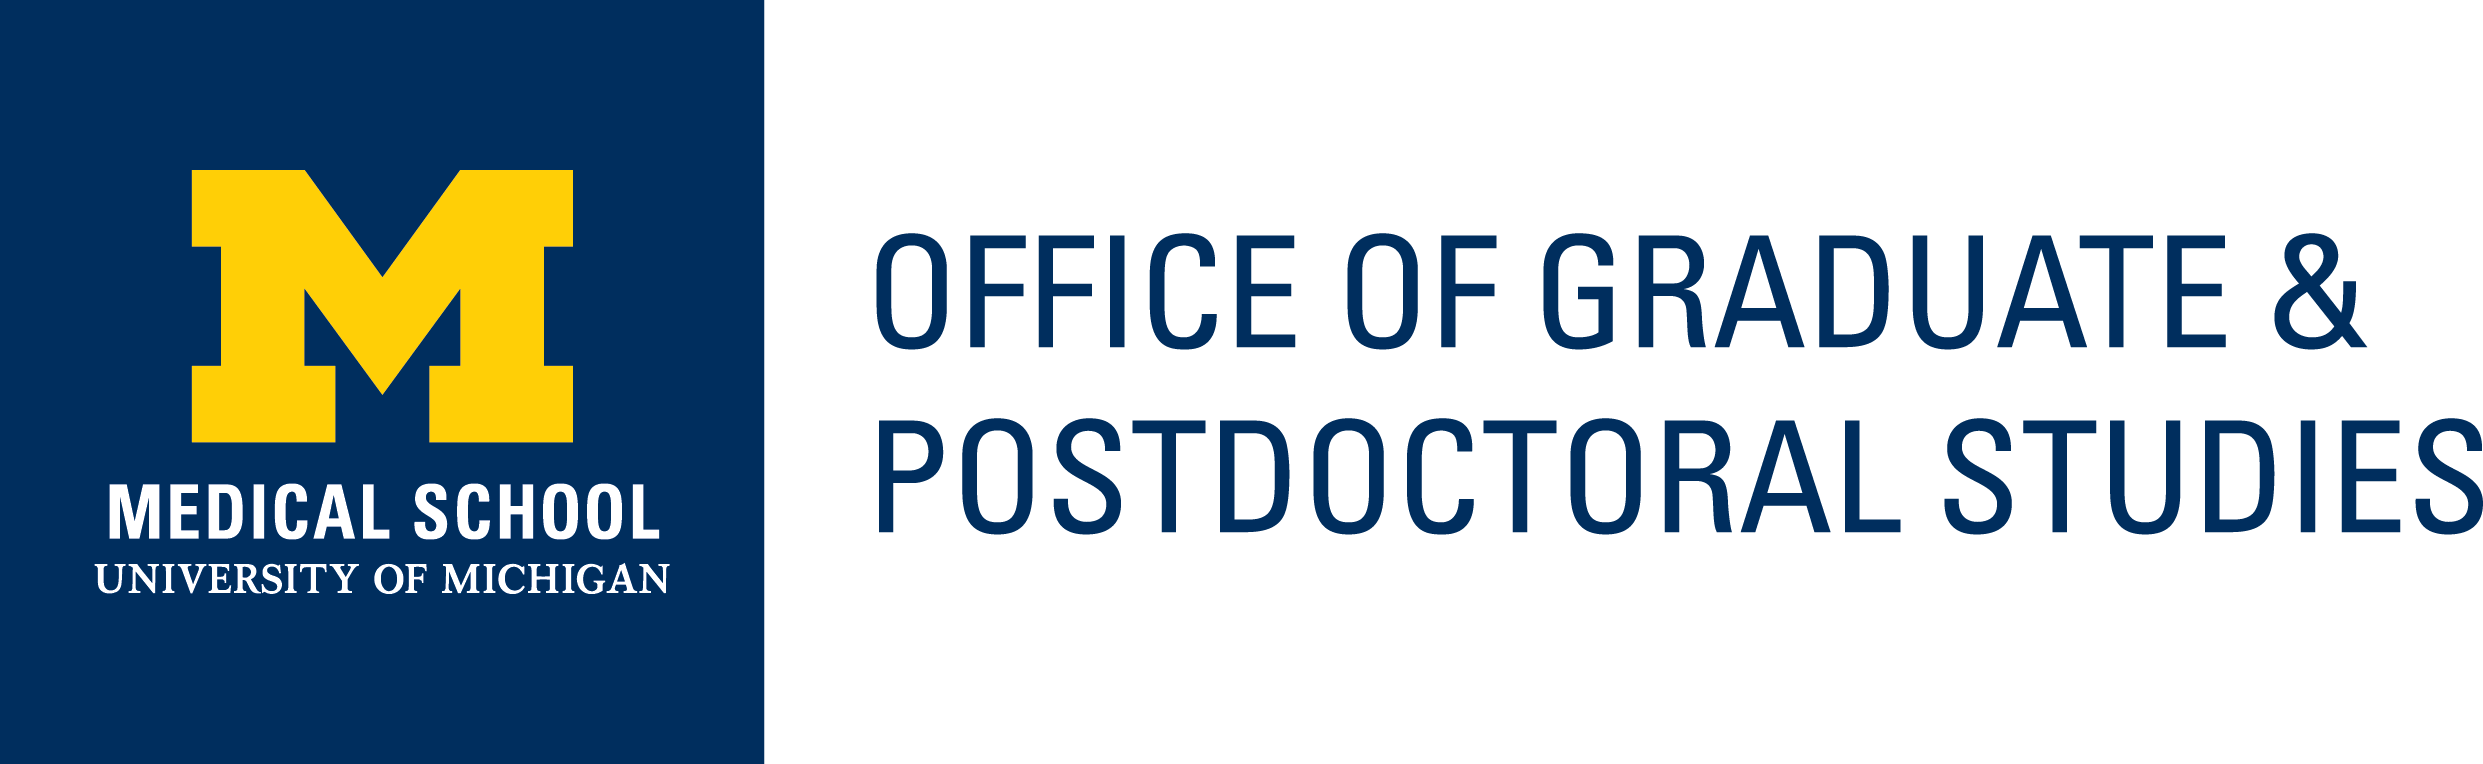 University of Michigan medical School Office of Graduate & Postdoctoral Studies